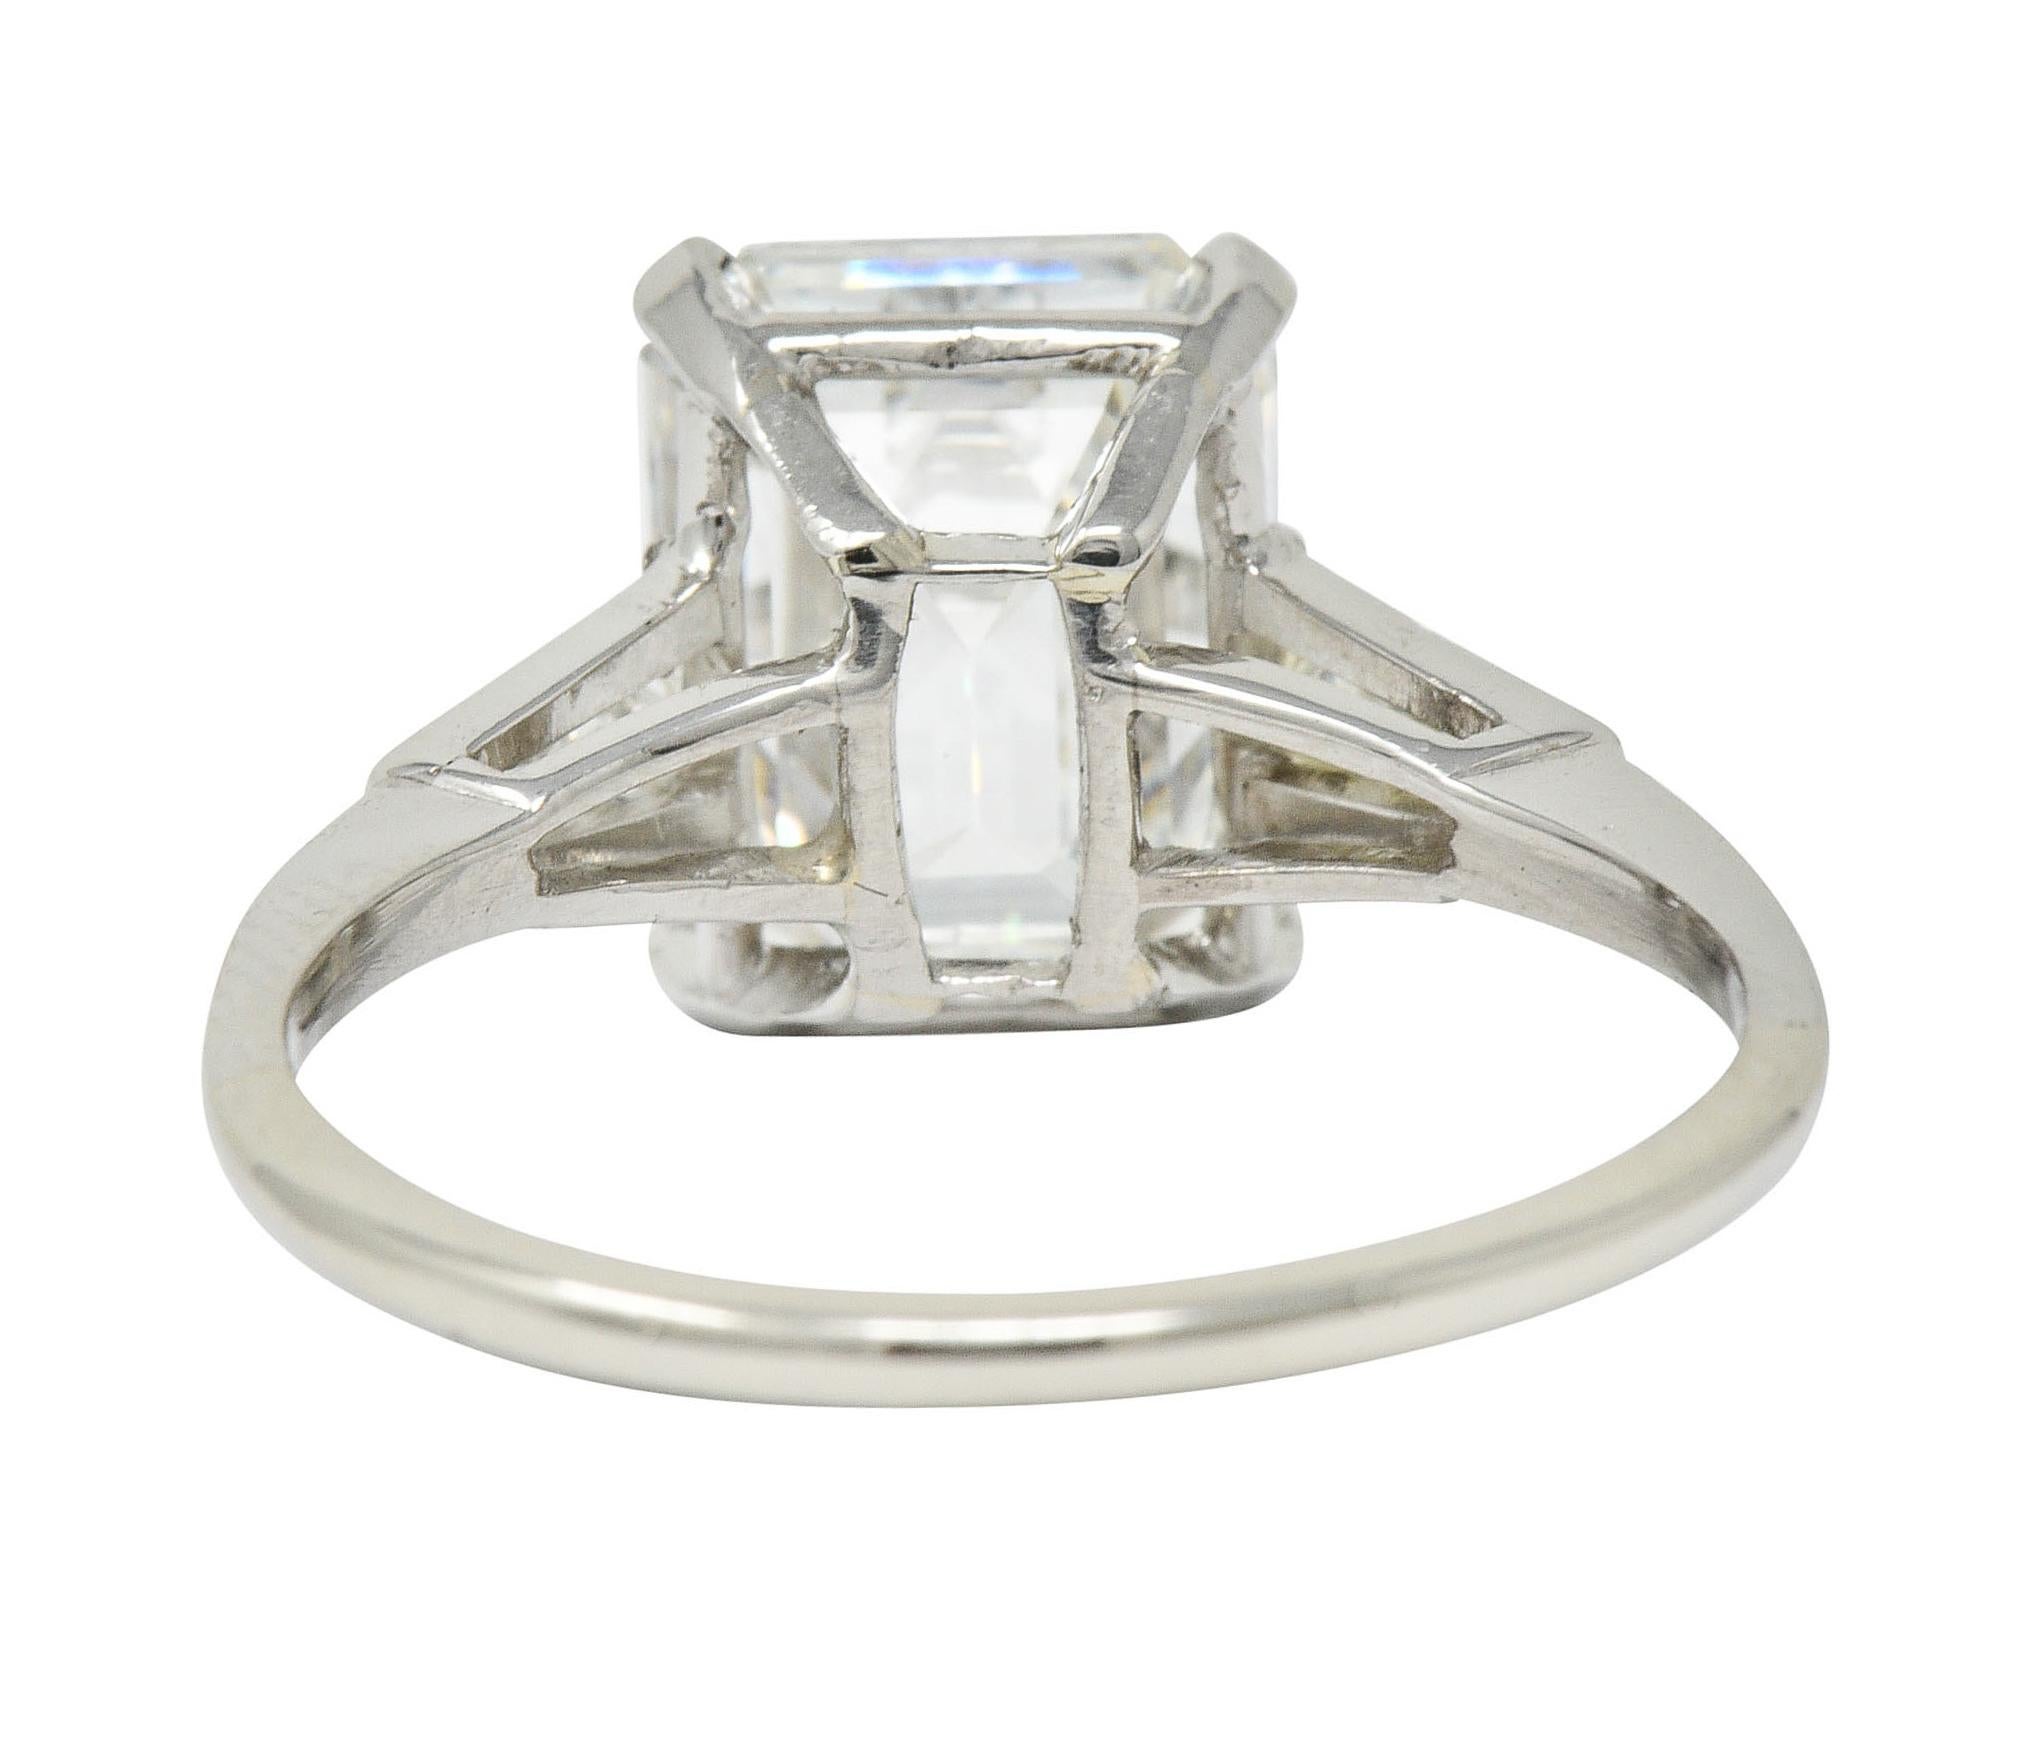 Substantial 4.58 Carat Emerald Cut Diamond Platinum Engagement Ring GIA 1